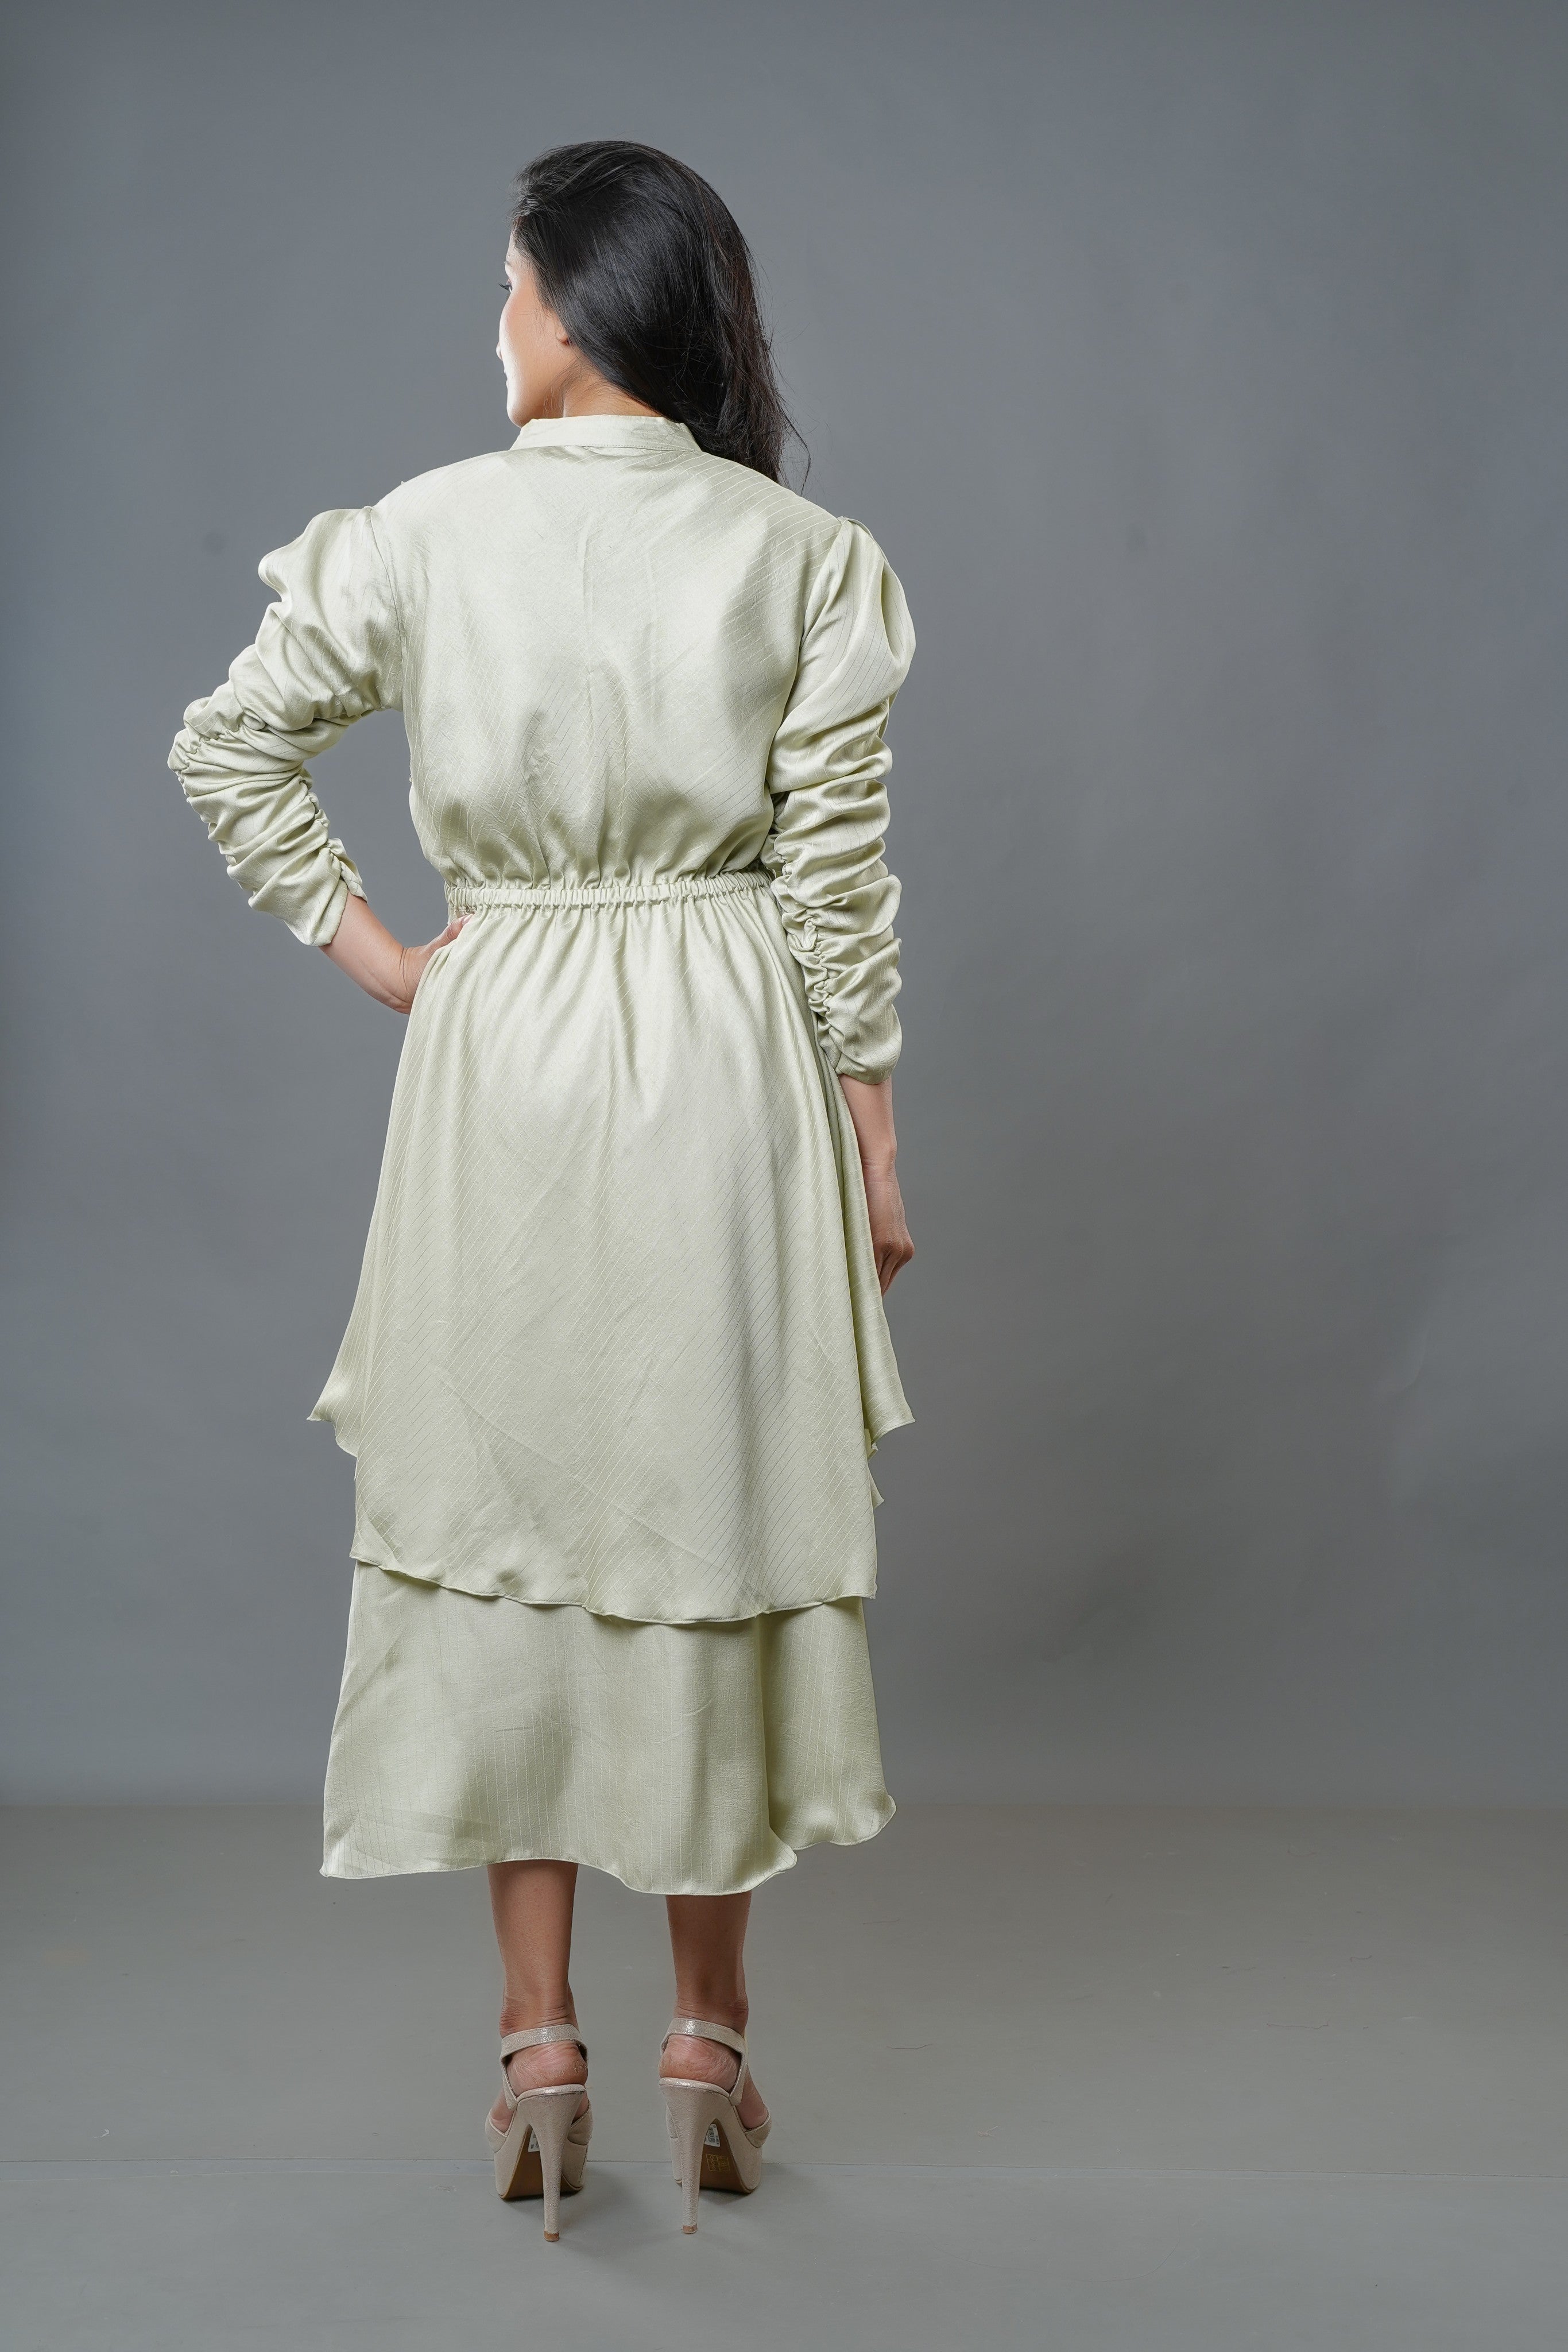 Embellished Cape-Styled Dress-1405